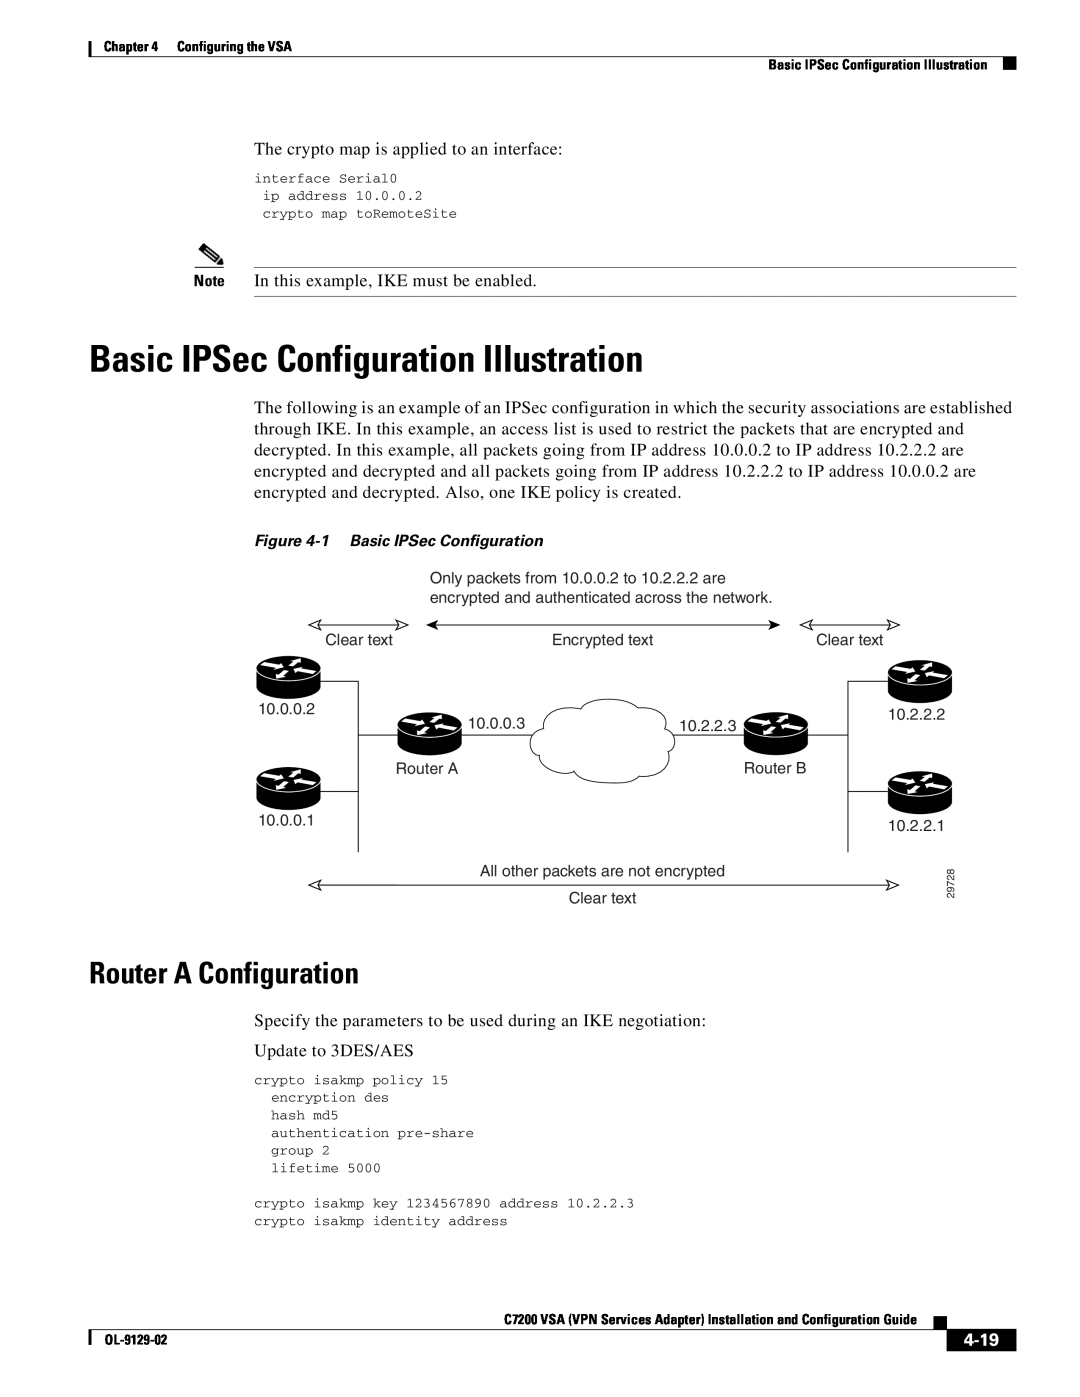 Cisco Systems C7200 manual Basic IPSec Configuration Illustration, Router A Configuration, 4-19 